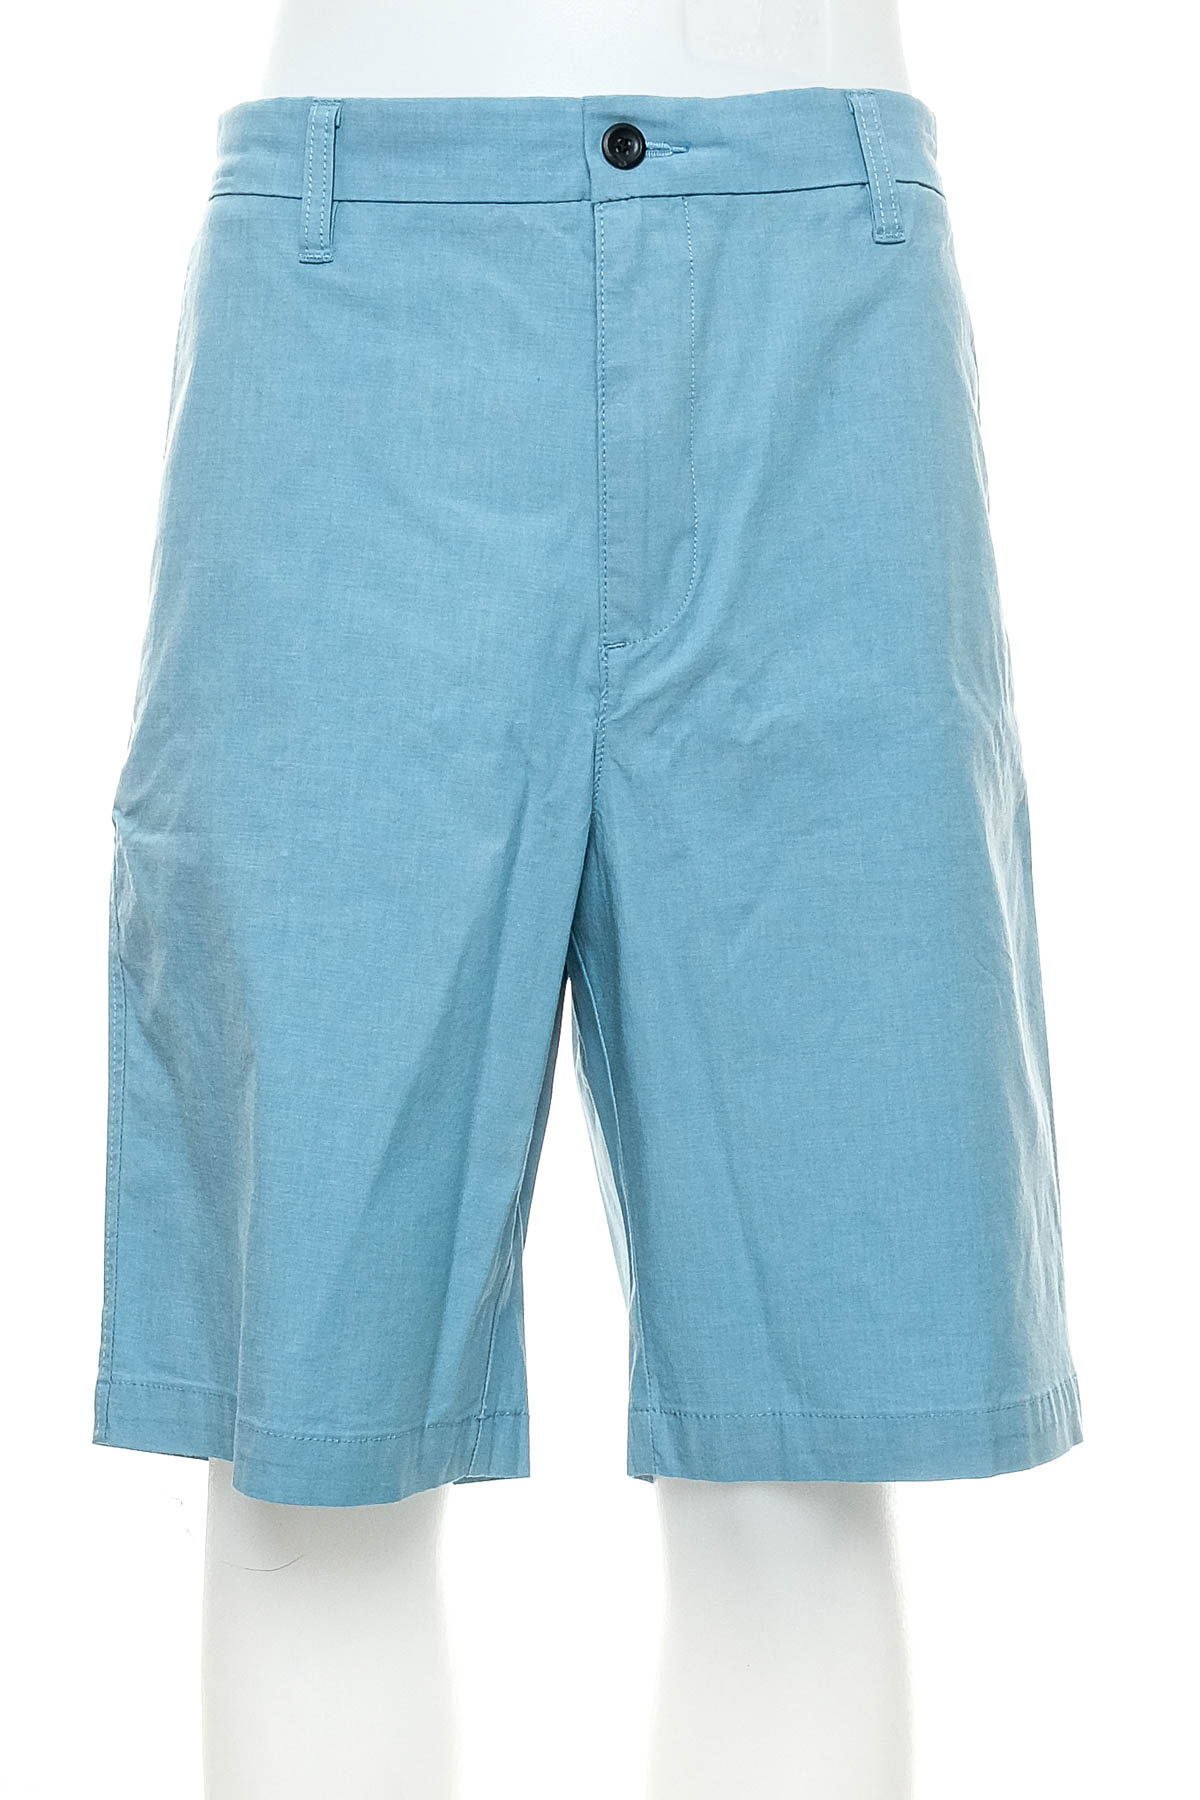 Men's shorts - DOCKERS - 0